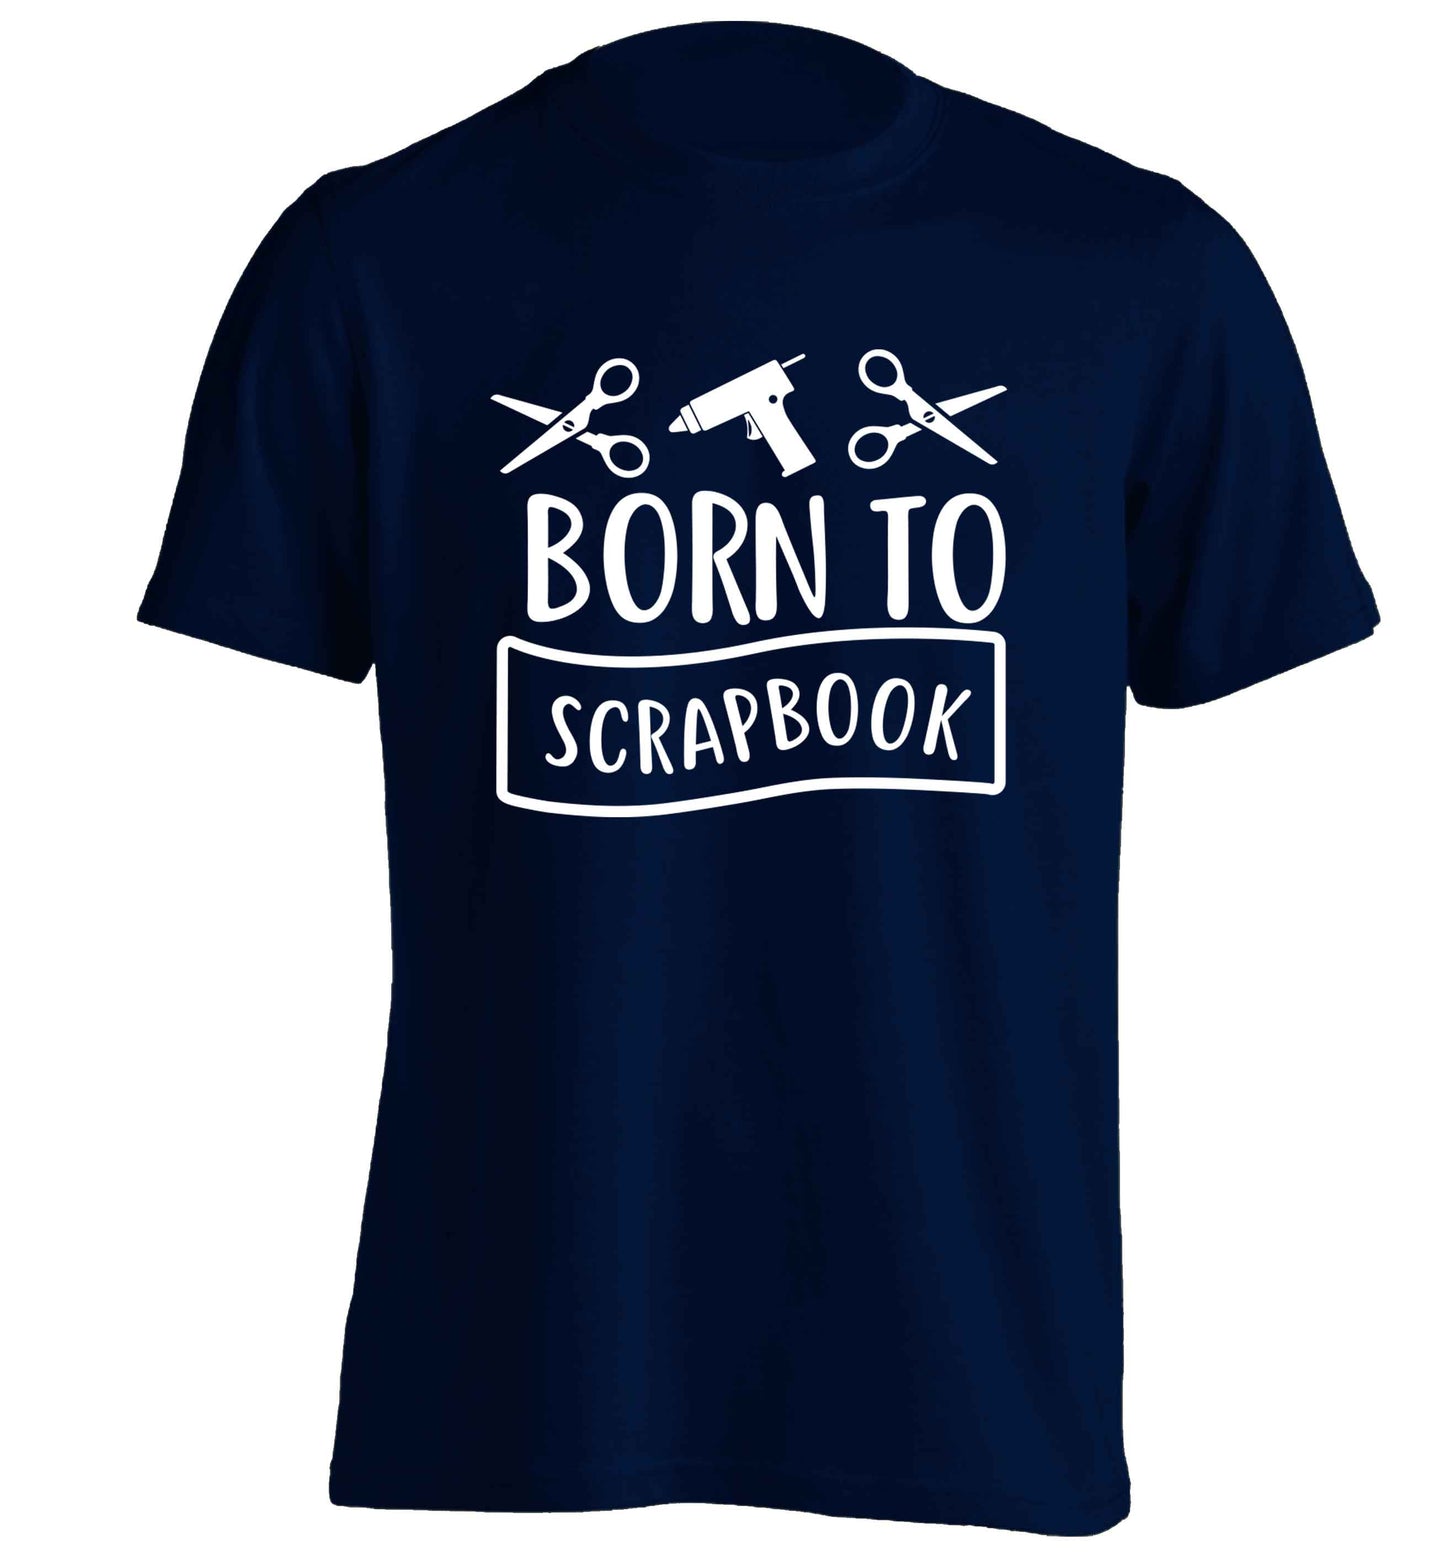 Born to scrapbook adults unisex navy Tshirt 2XL